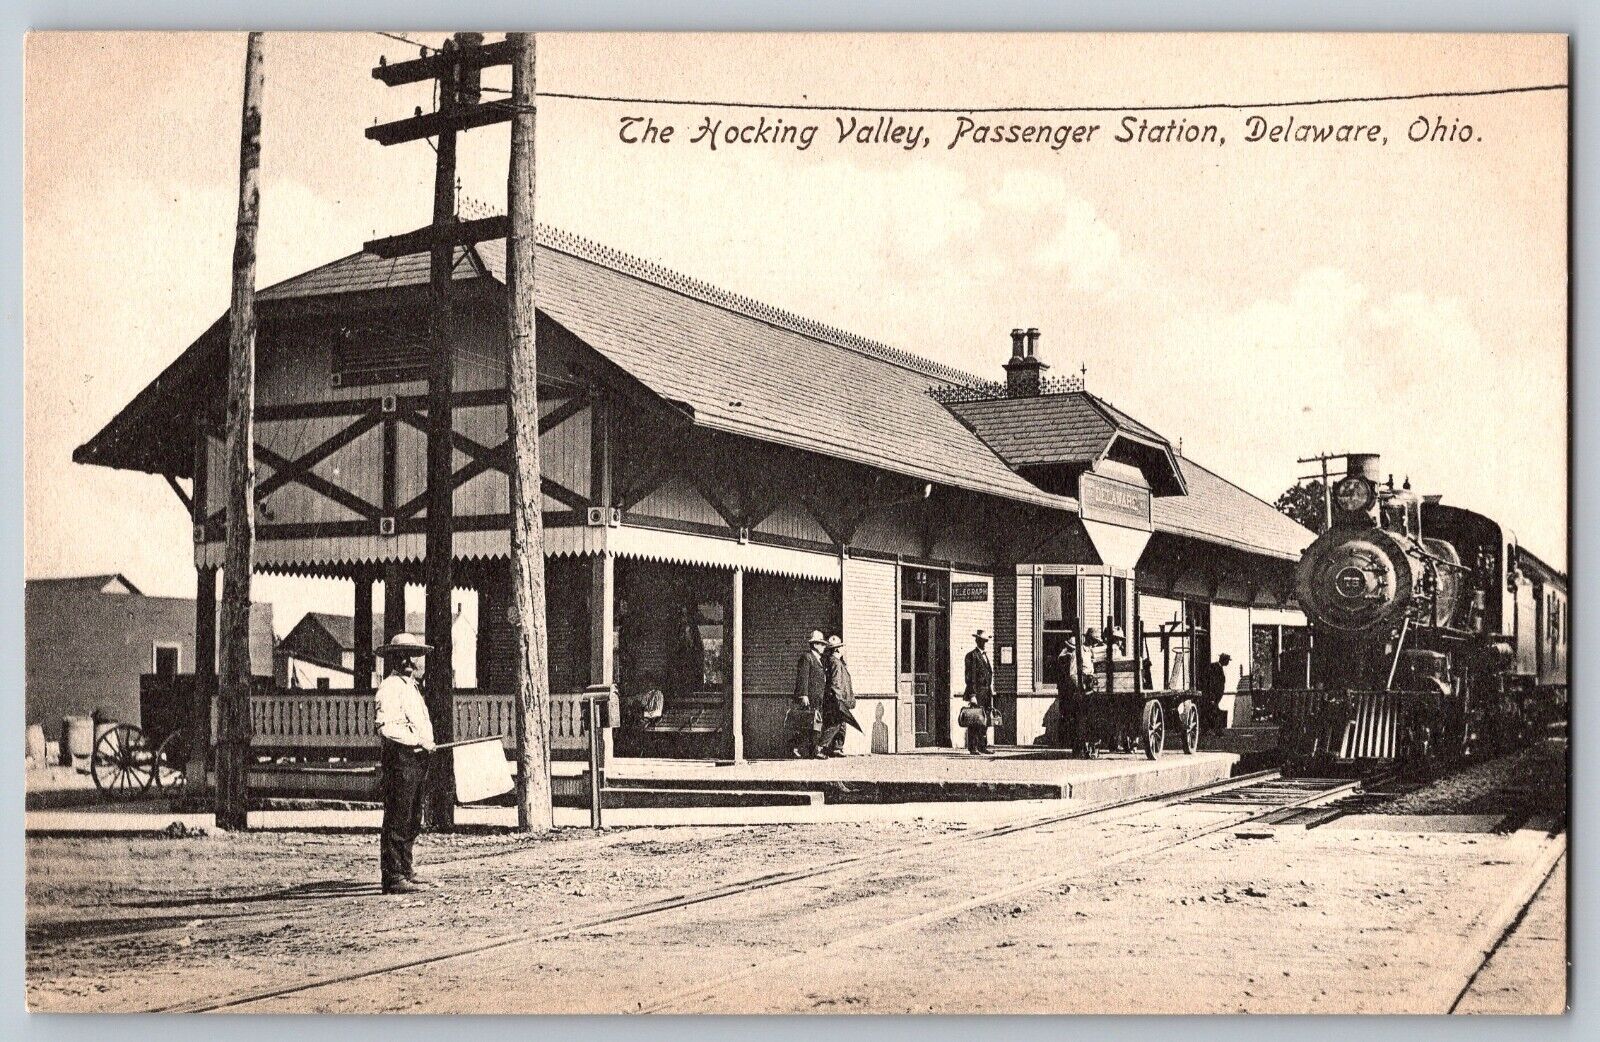 Delaware, Ohio OH - Passenger Station of the Hocking Valley - Vintage Postcard